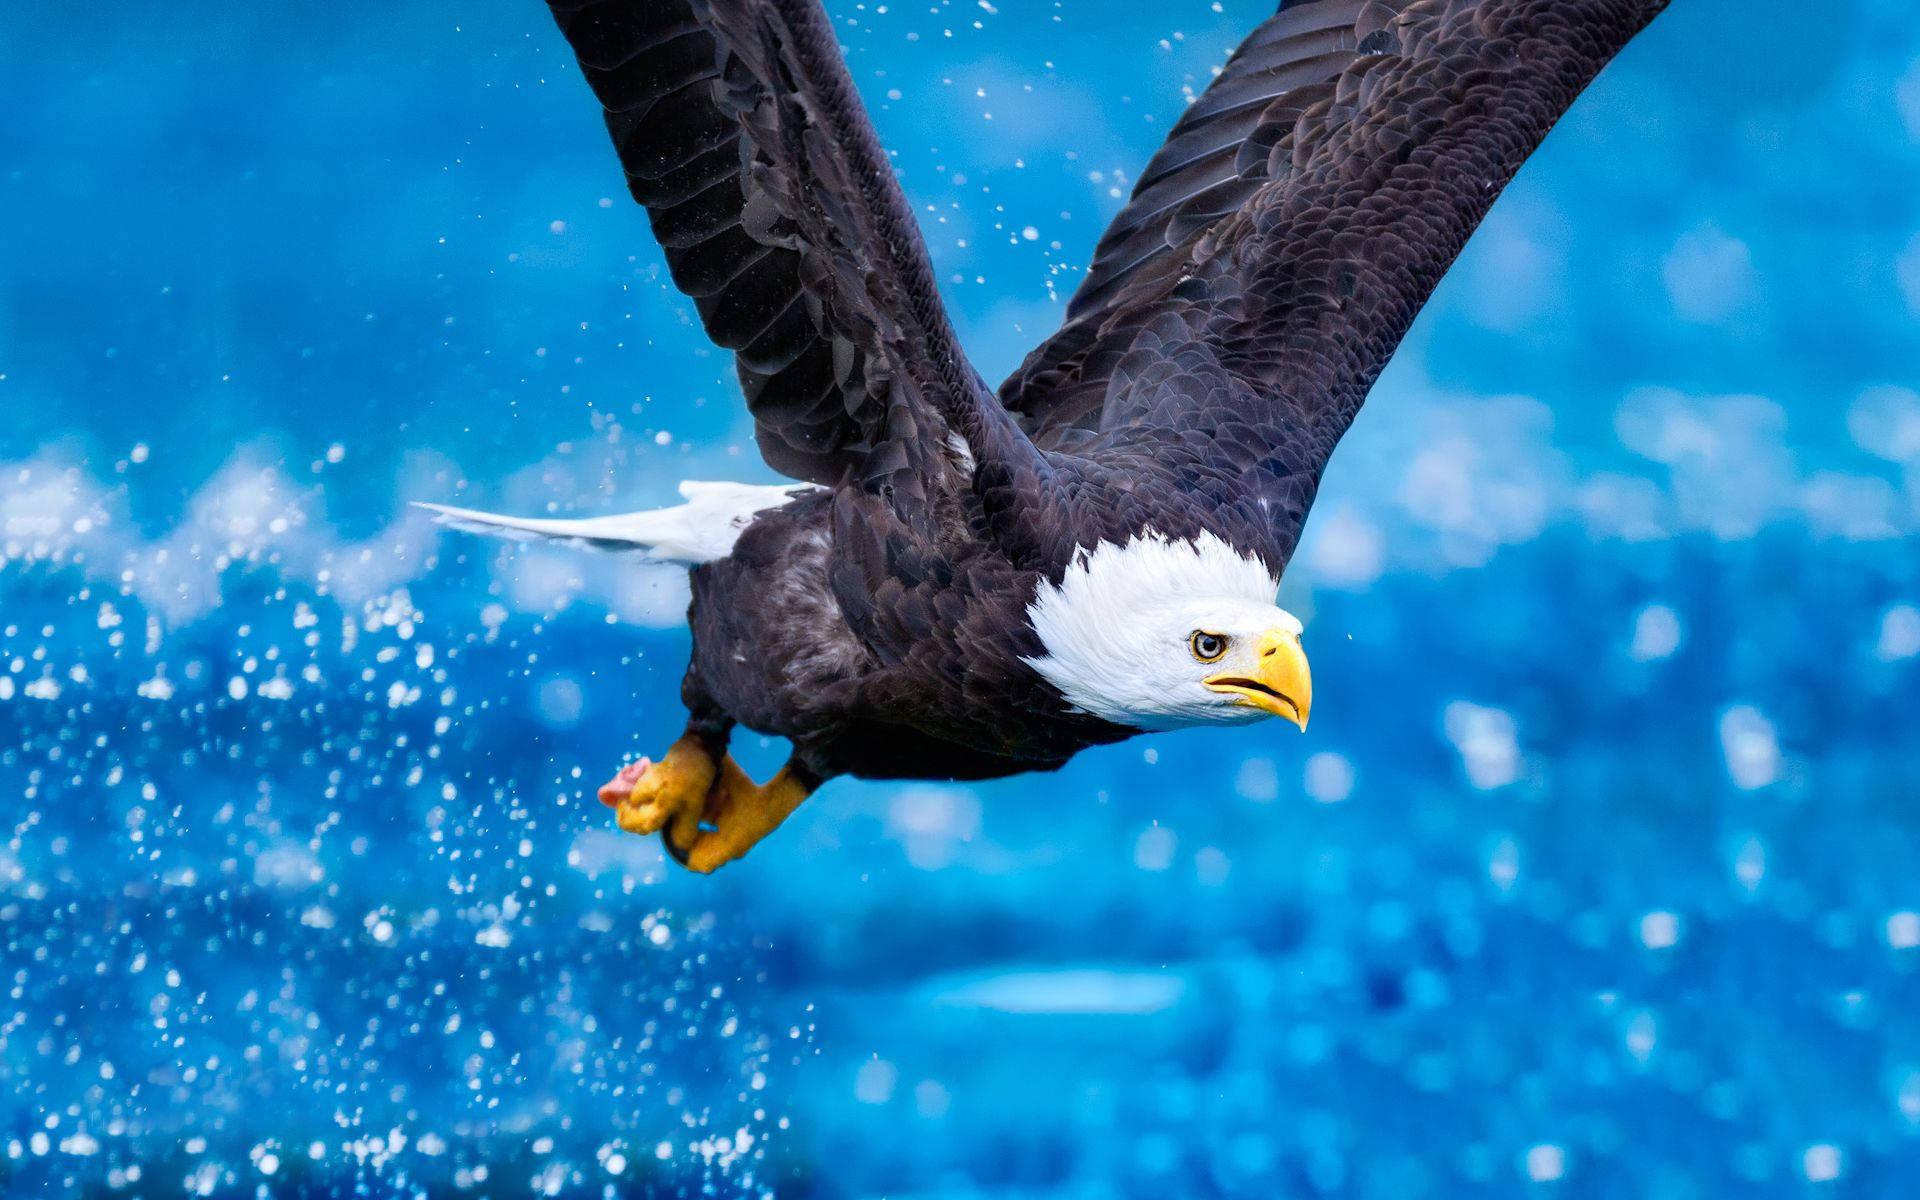 Us Eagle And Water Splash Background